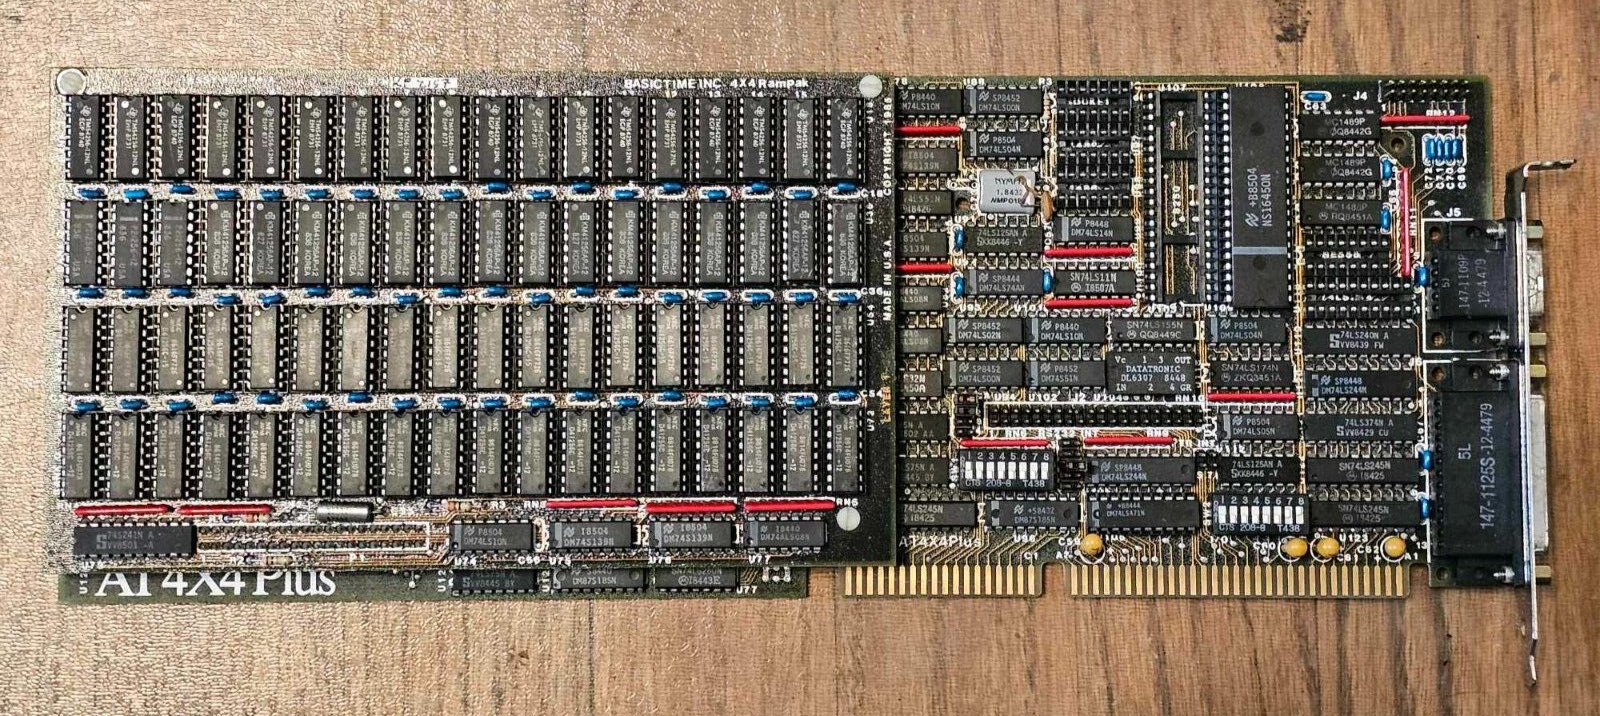 Vintage Rare 386 AT 4X4 Plus with 4X4 RamPak Expansion Memory Multi/IO ISA Card